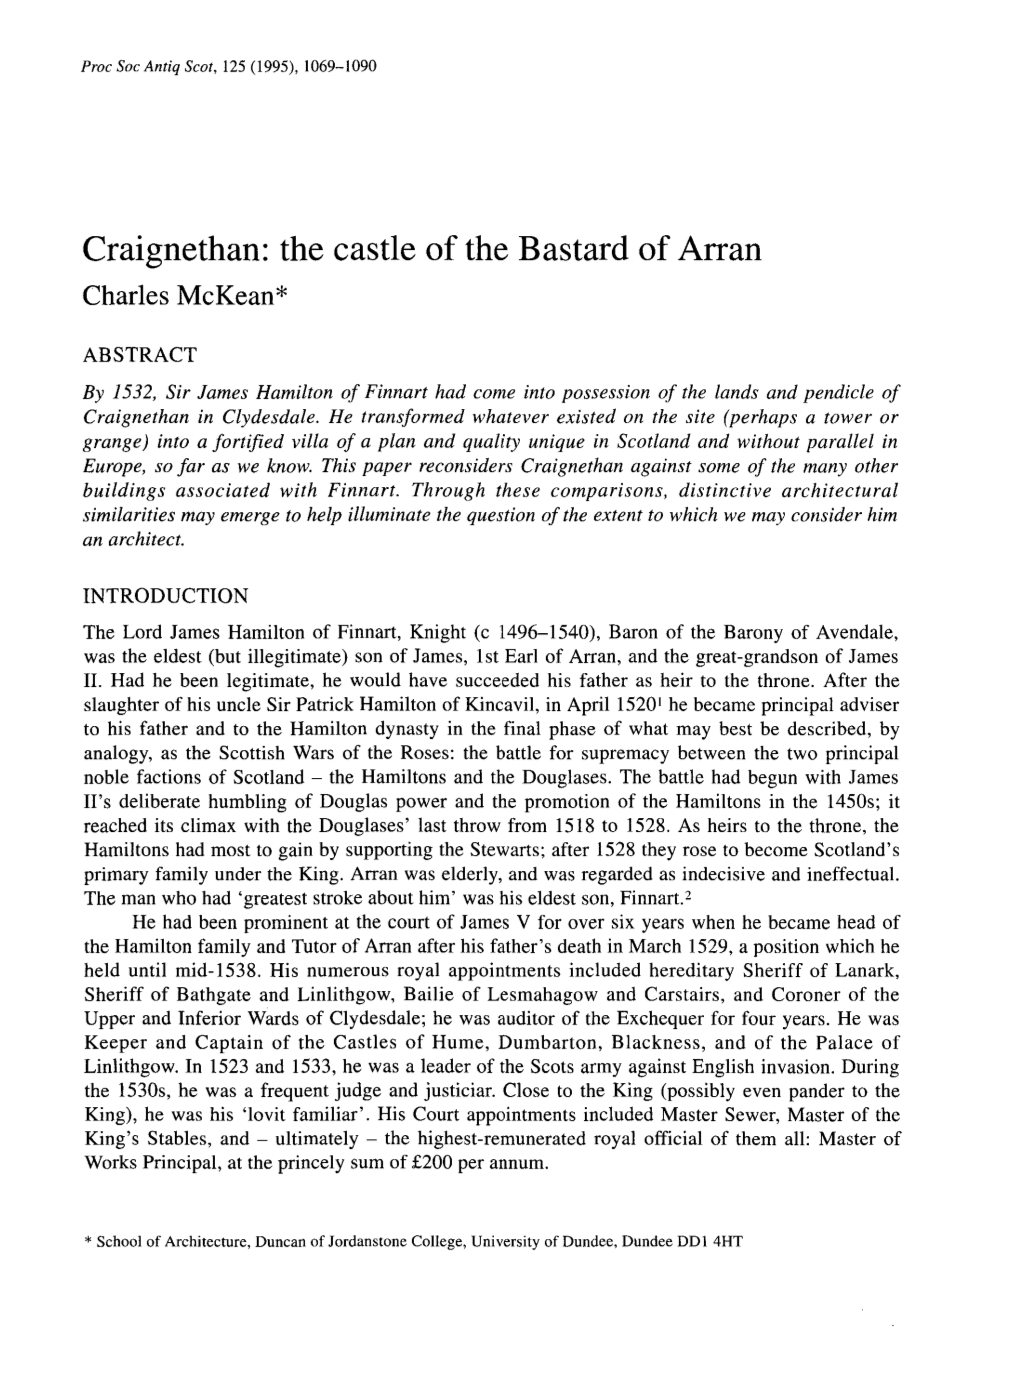 Craignethan: the Castle of the Bastard of Arran Charles Mckean*